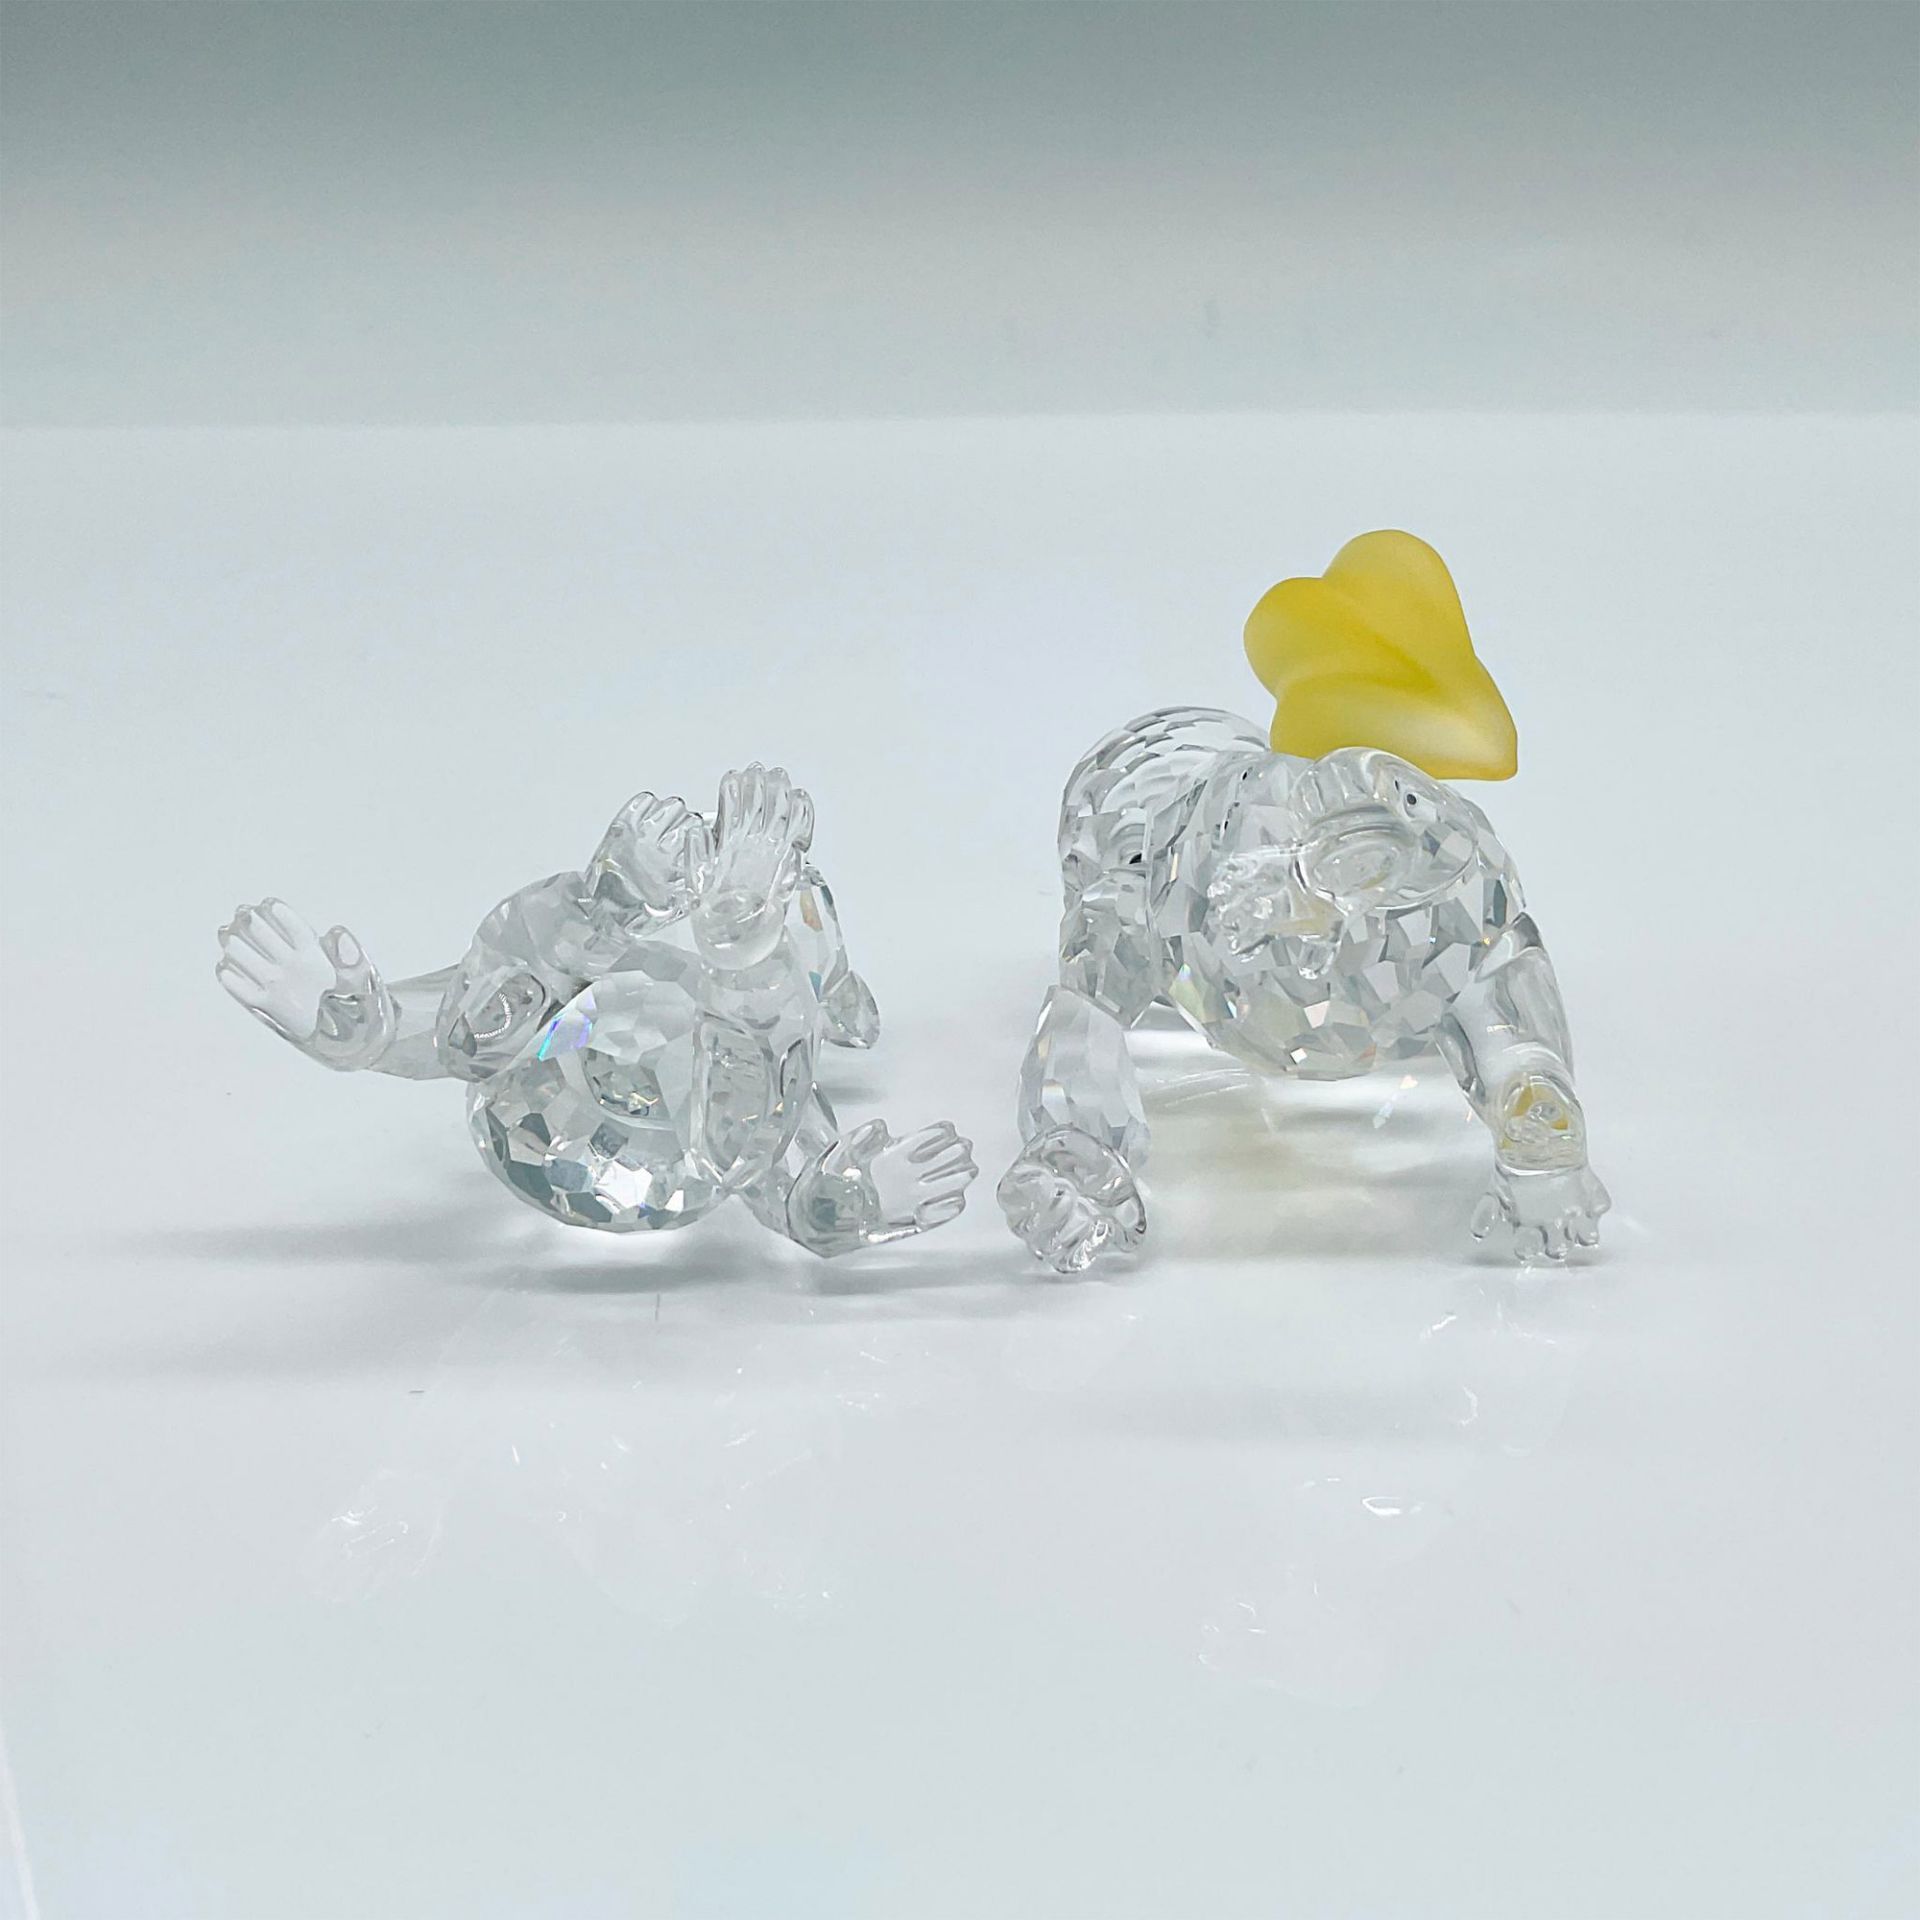 2pc Swarovski Crystal Figurines, Chimpanzee & Gorilla Young - Image 3 of 3